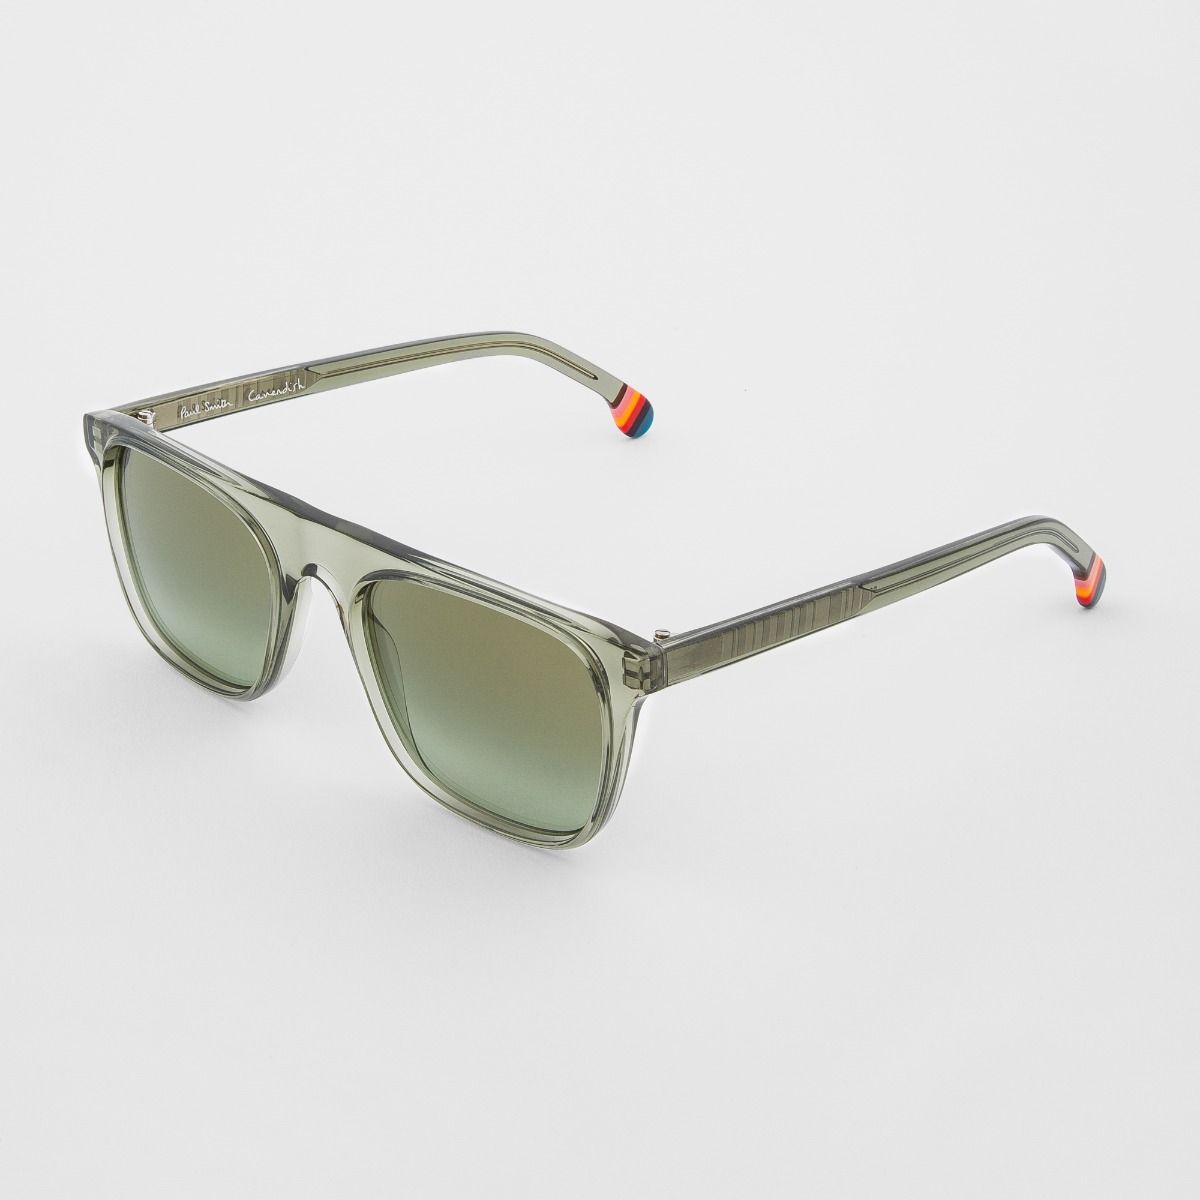 Paul Smith Cavendish Square Sunglasses